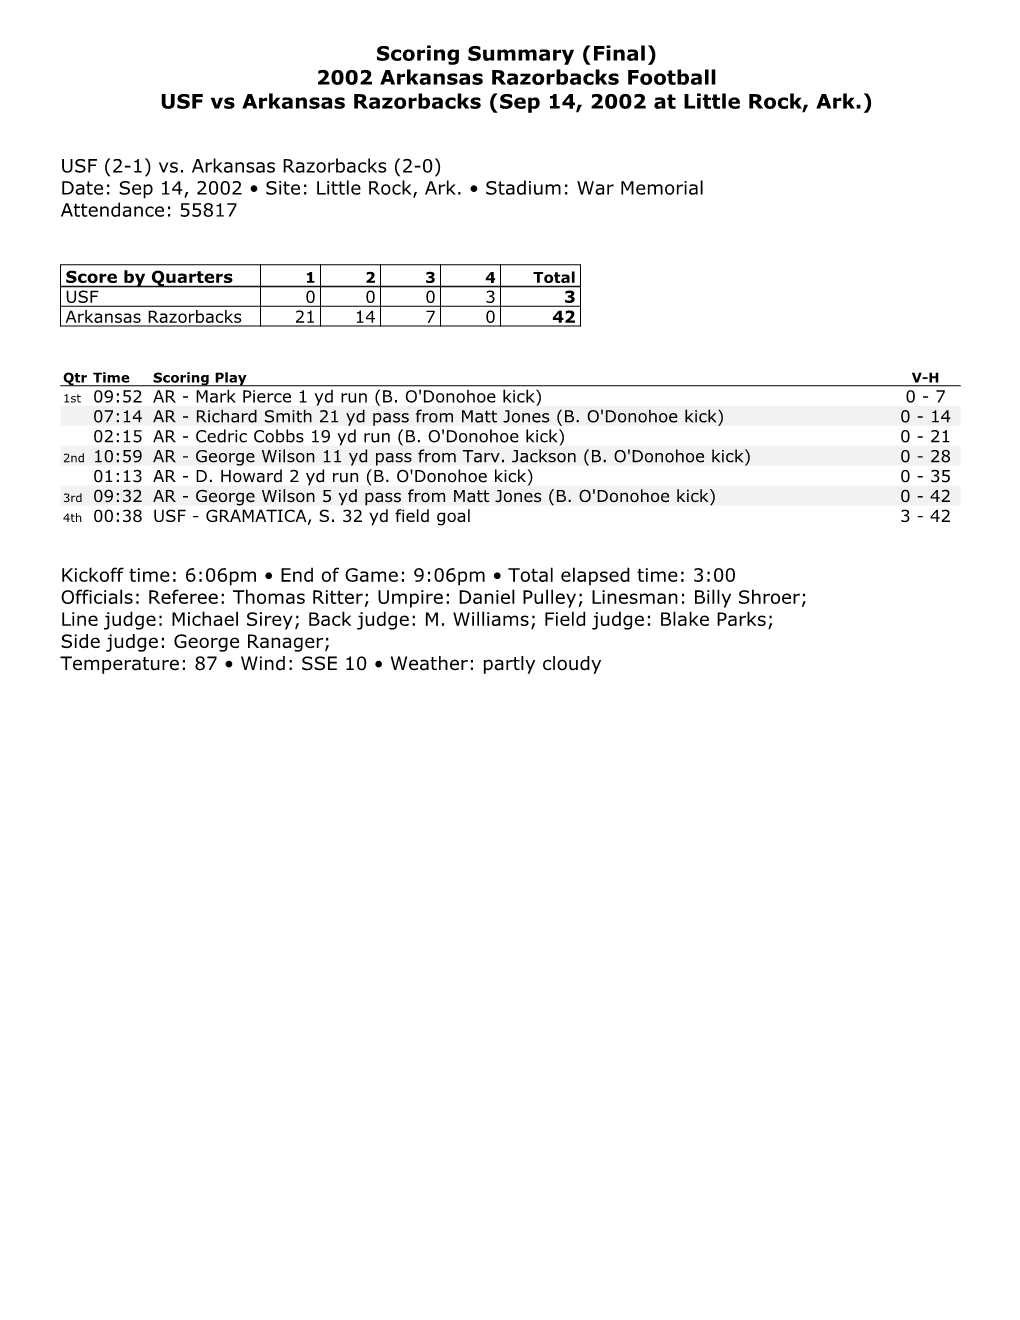 Scoring Summary (Final) 2002 Arkansas Razorbacks Football USF Vs Arkansas Razorbacks (Sep 14, 2002 at Little Rock, Ark.)